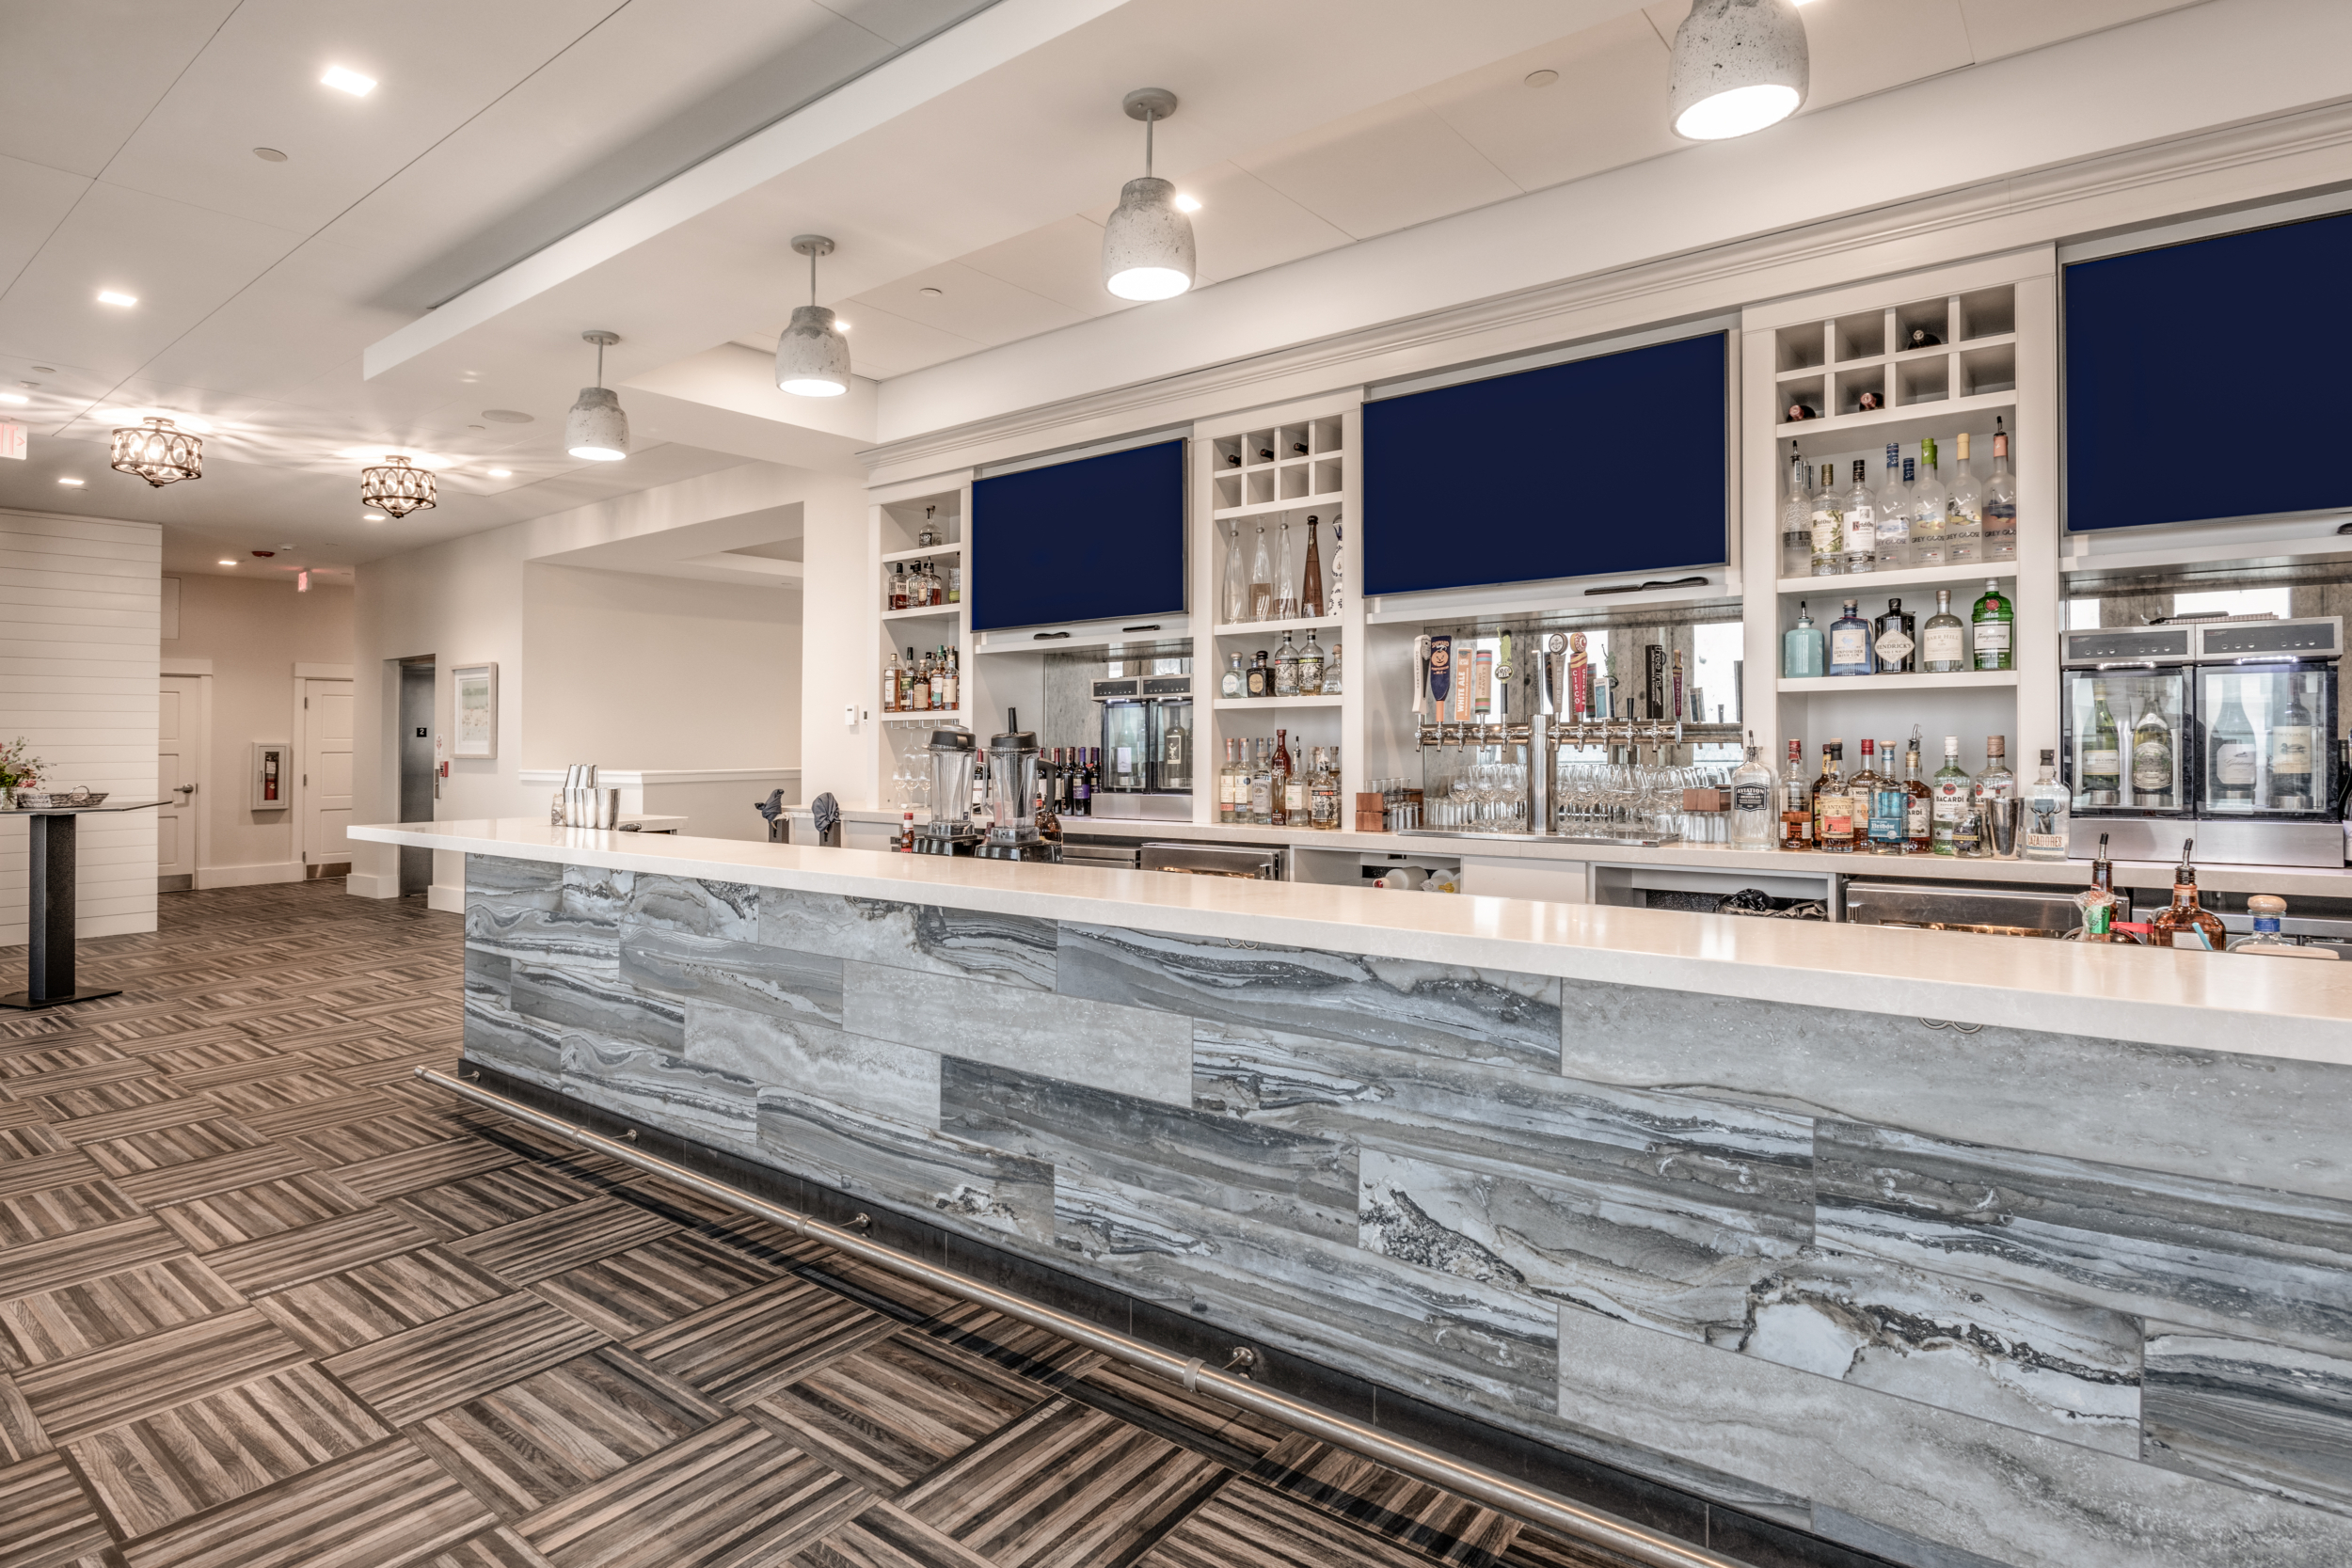 11 wedding facility design restaurant bar design hotel renovation 9